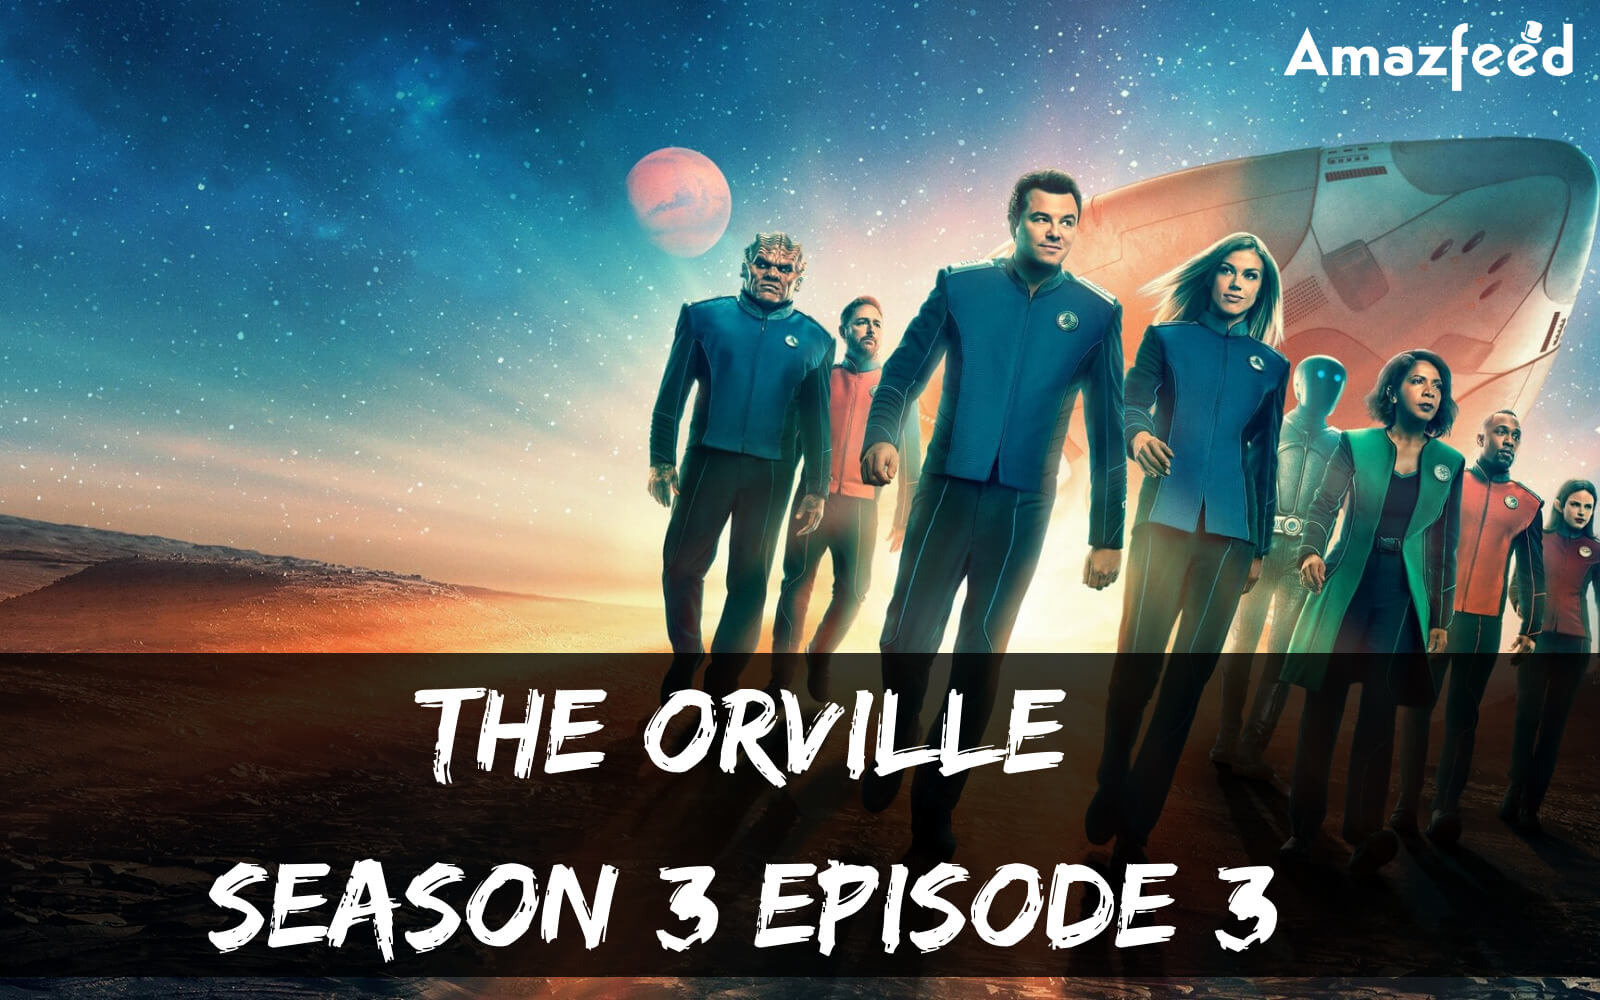 The Orville Season 3 Episode 3 Release Date